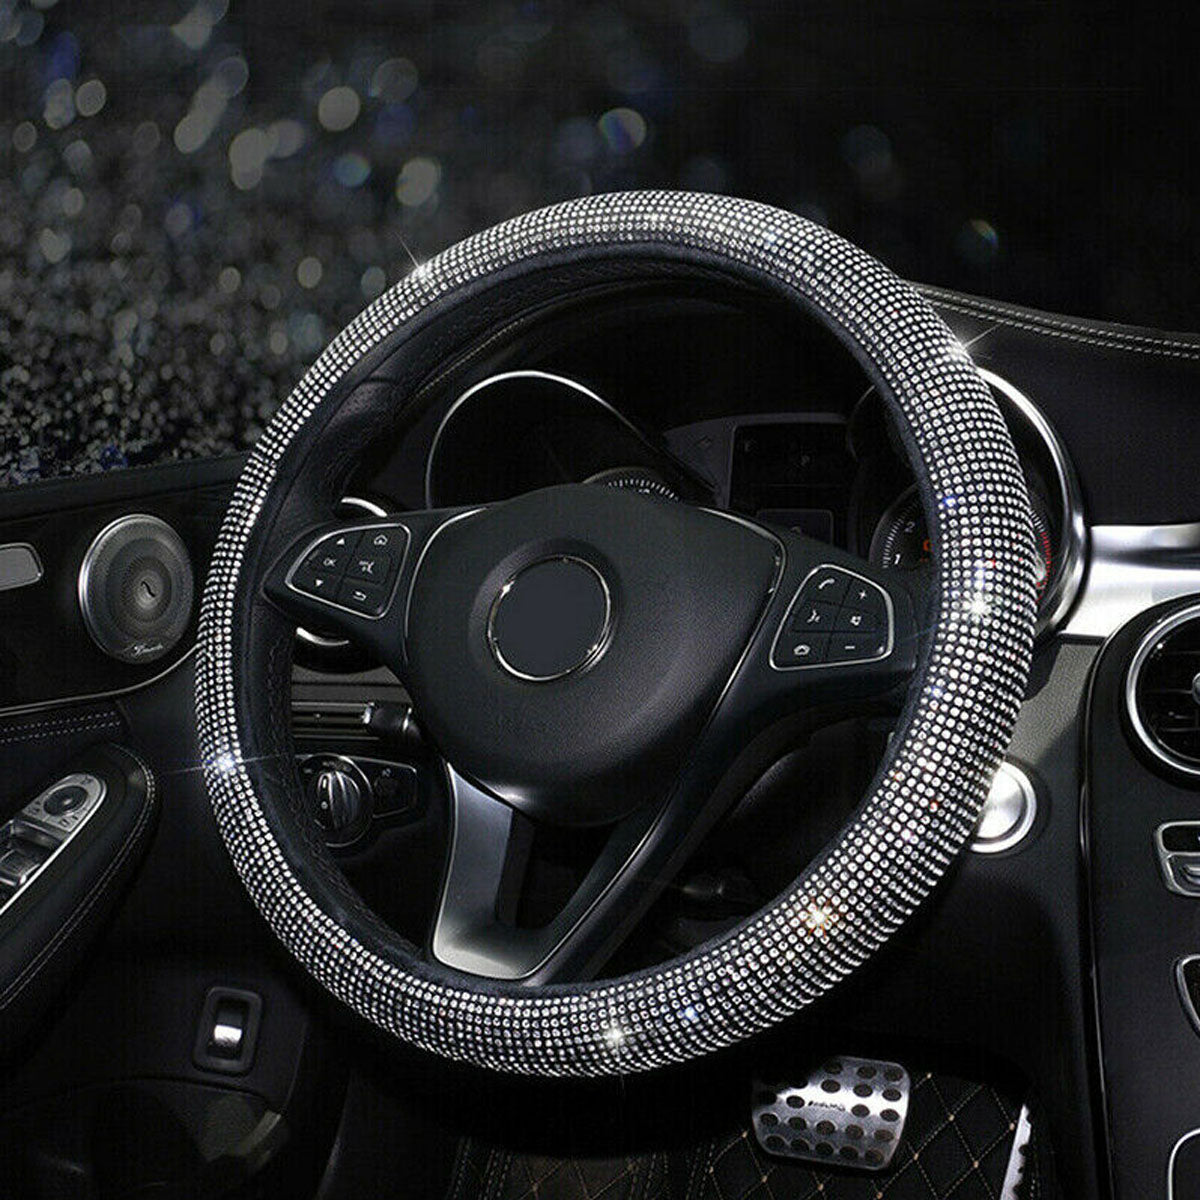 Universal Sparkle Luxury Sparkling Diamond Car Interior Accessories Decoration - Auto GoShop